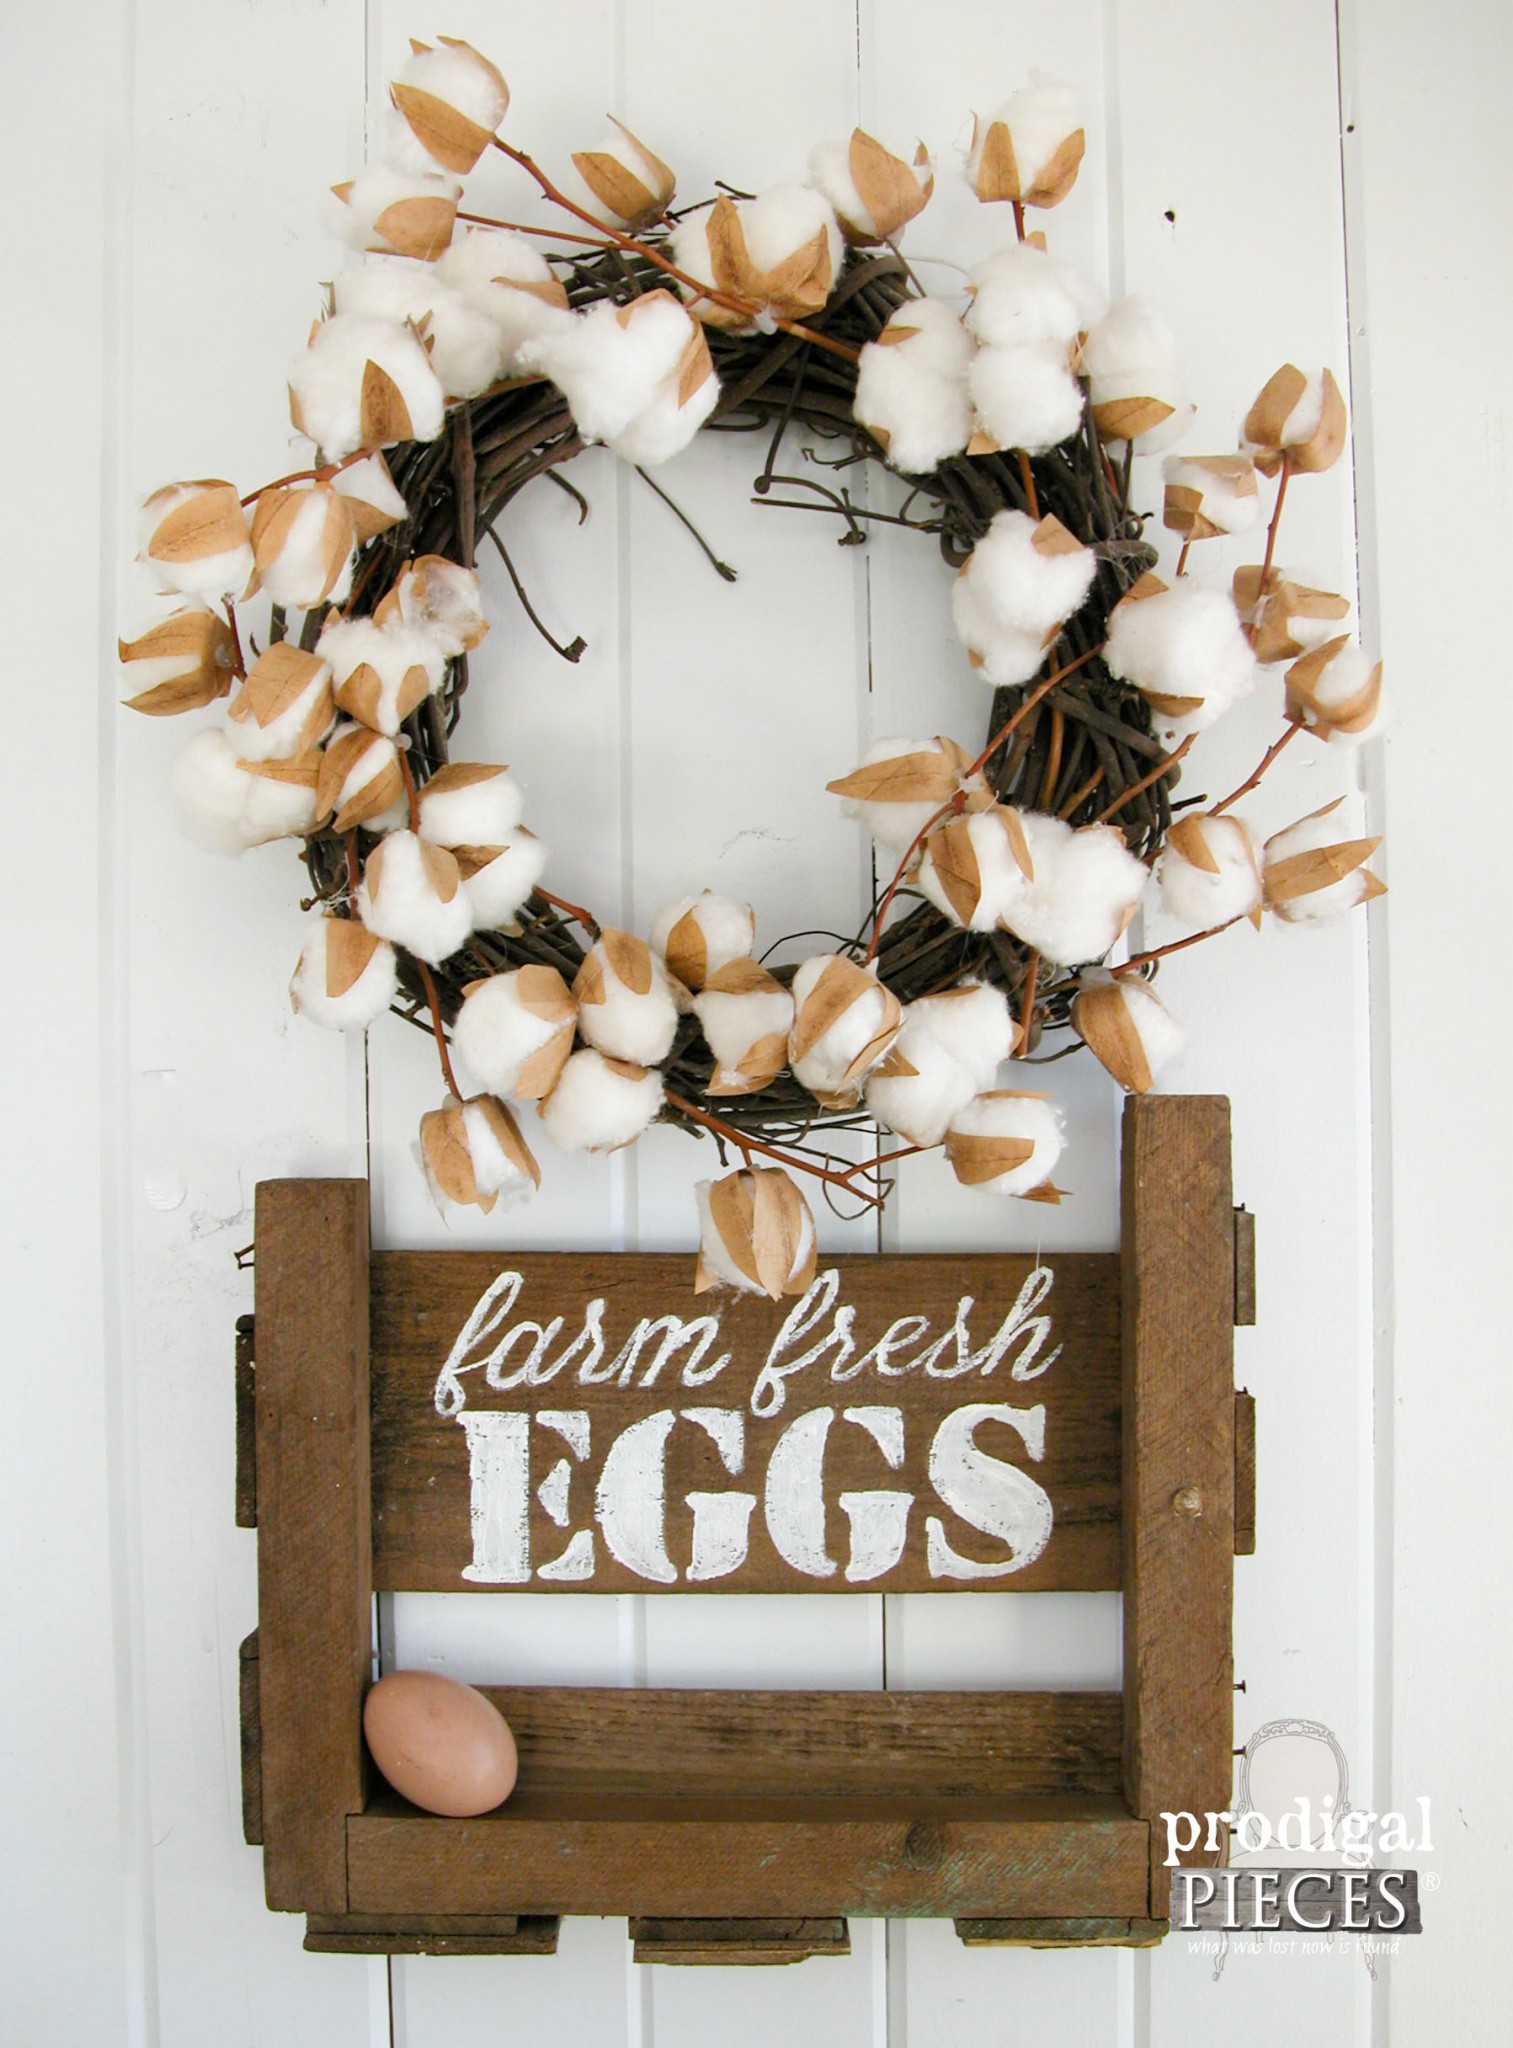 Handmade Repurposed Crate "Farm Fresh Eggs" Sign by Prodigal Pieces | prodigalpieces.com #prodigalpieces